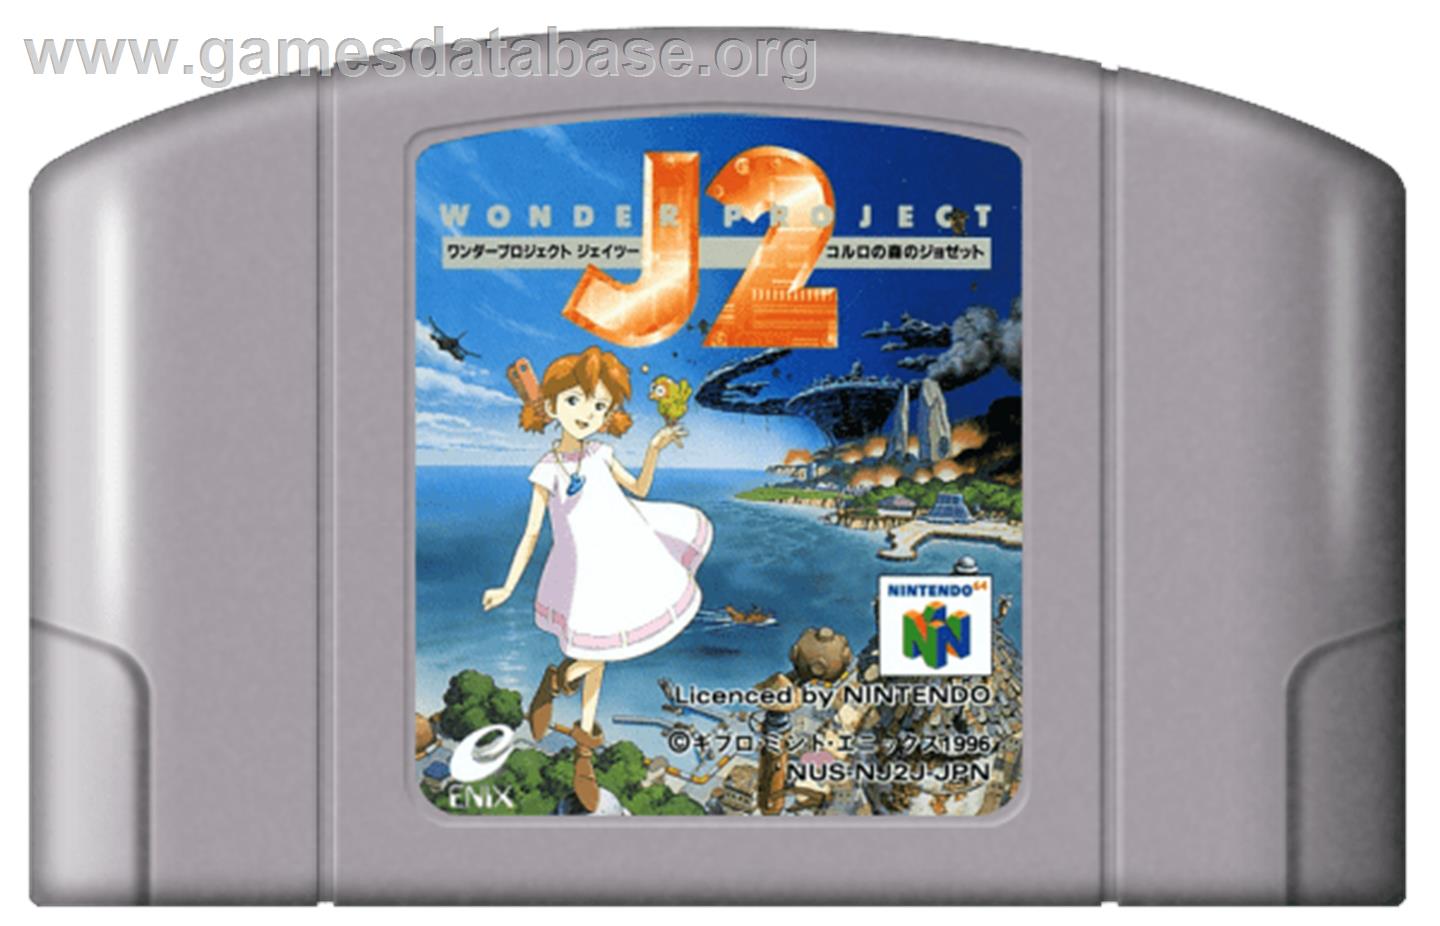 Wonder Project J2: Koruro no Mori no Jozet - Nintendo N64 - Artwork - Cartridge